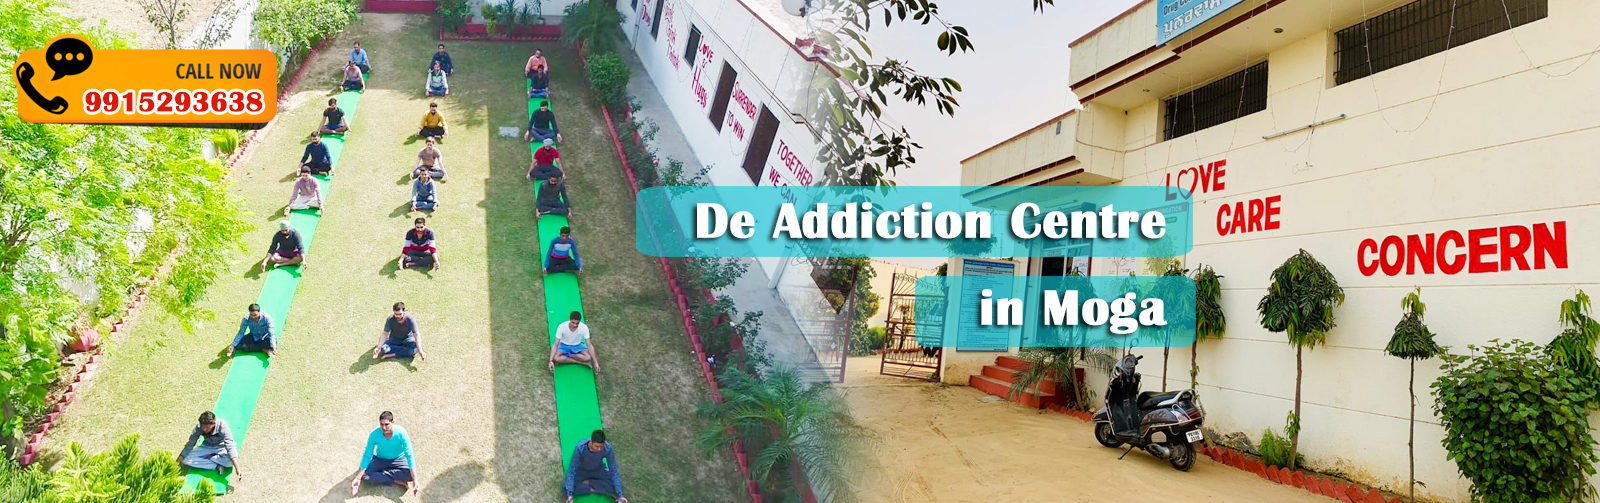 De Addiction Centre in Moga